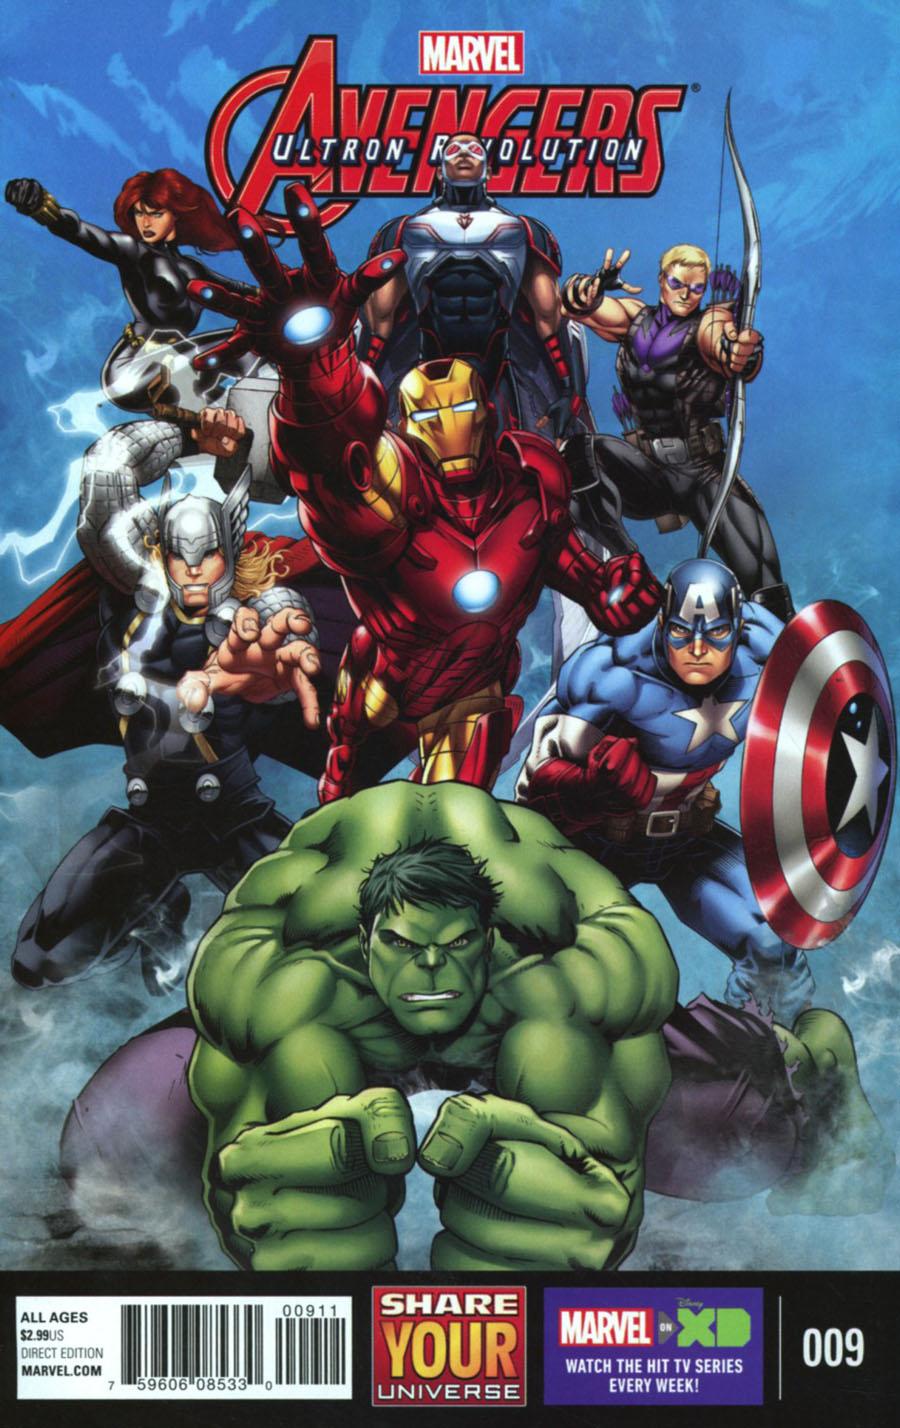 Marvel Universe Avengers Ultron Revolution Vol. 1 #9